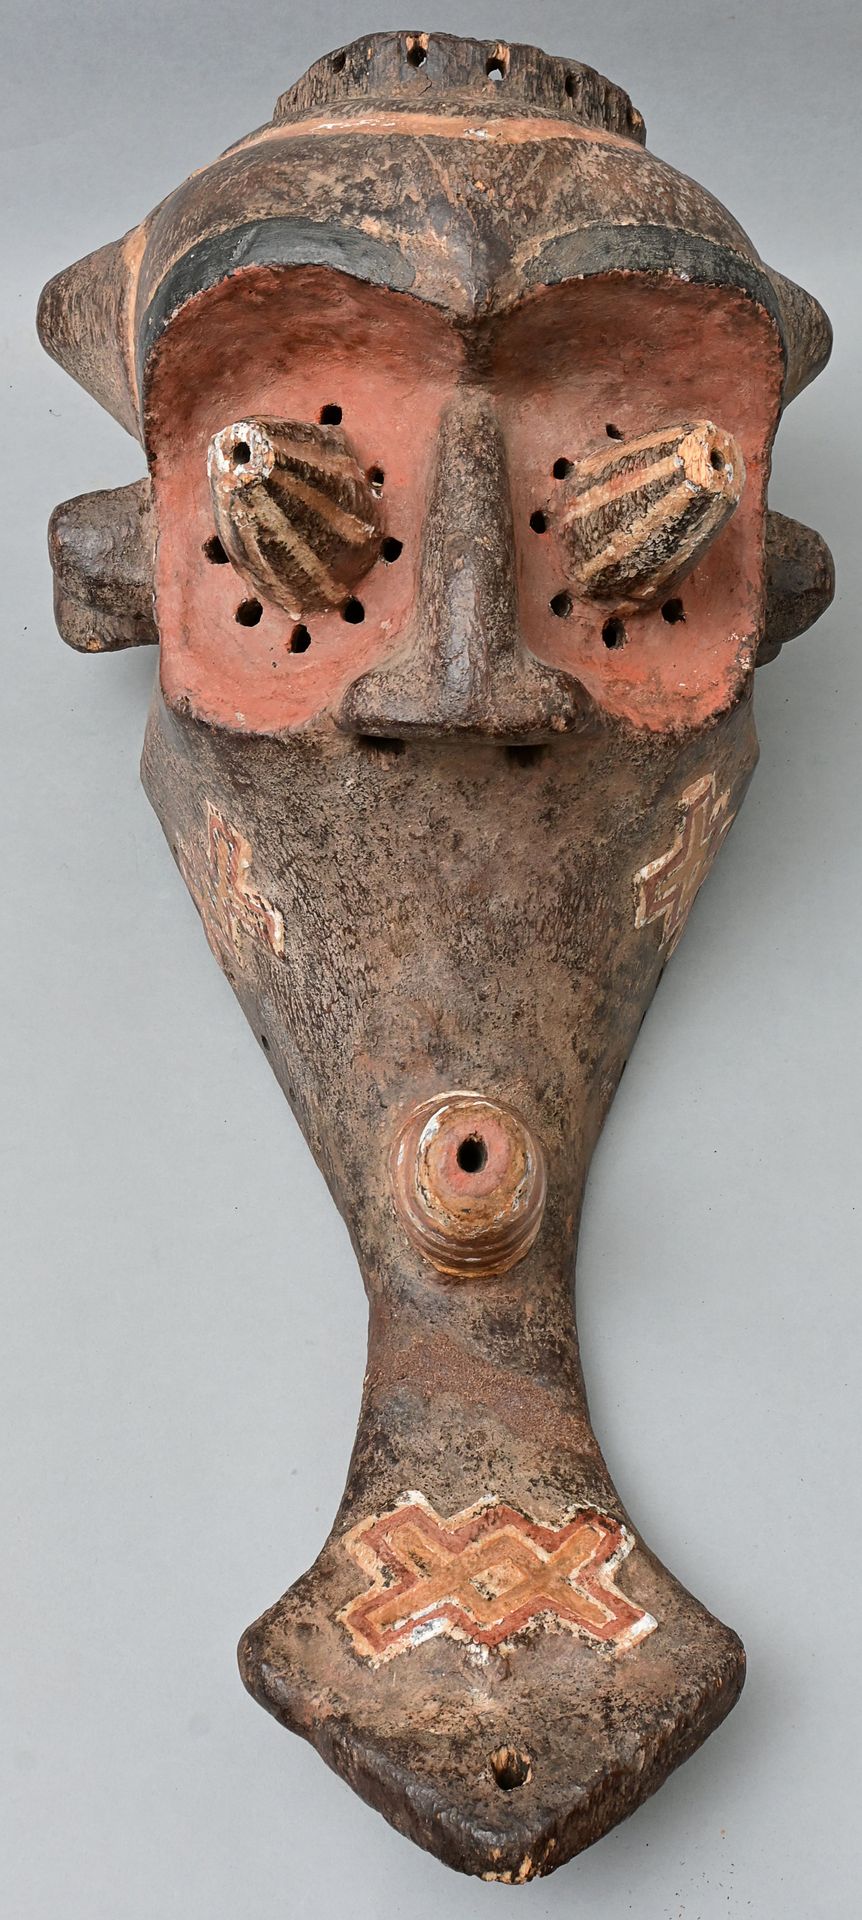 Null 拟人面具，Kete（古巴），刚果木，雕刻，用红色、黑色、赭石和白色颜料绘制。圆锥形的眼睛在深陷的眼窝里，下巴部位抽象地拉长。颅骨板区域的圆形开口。在下&hellip;